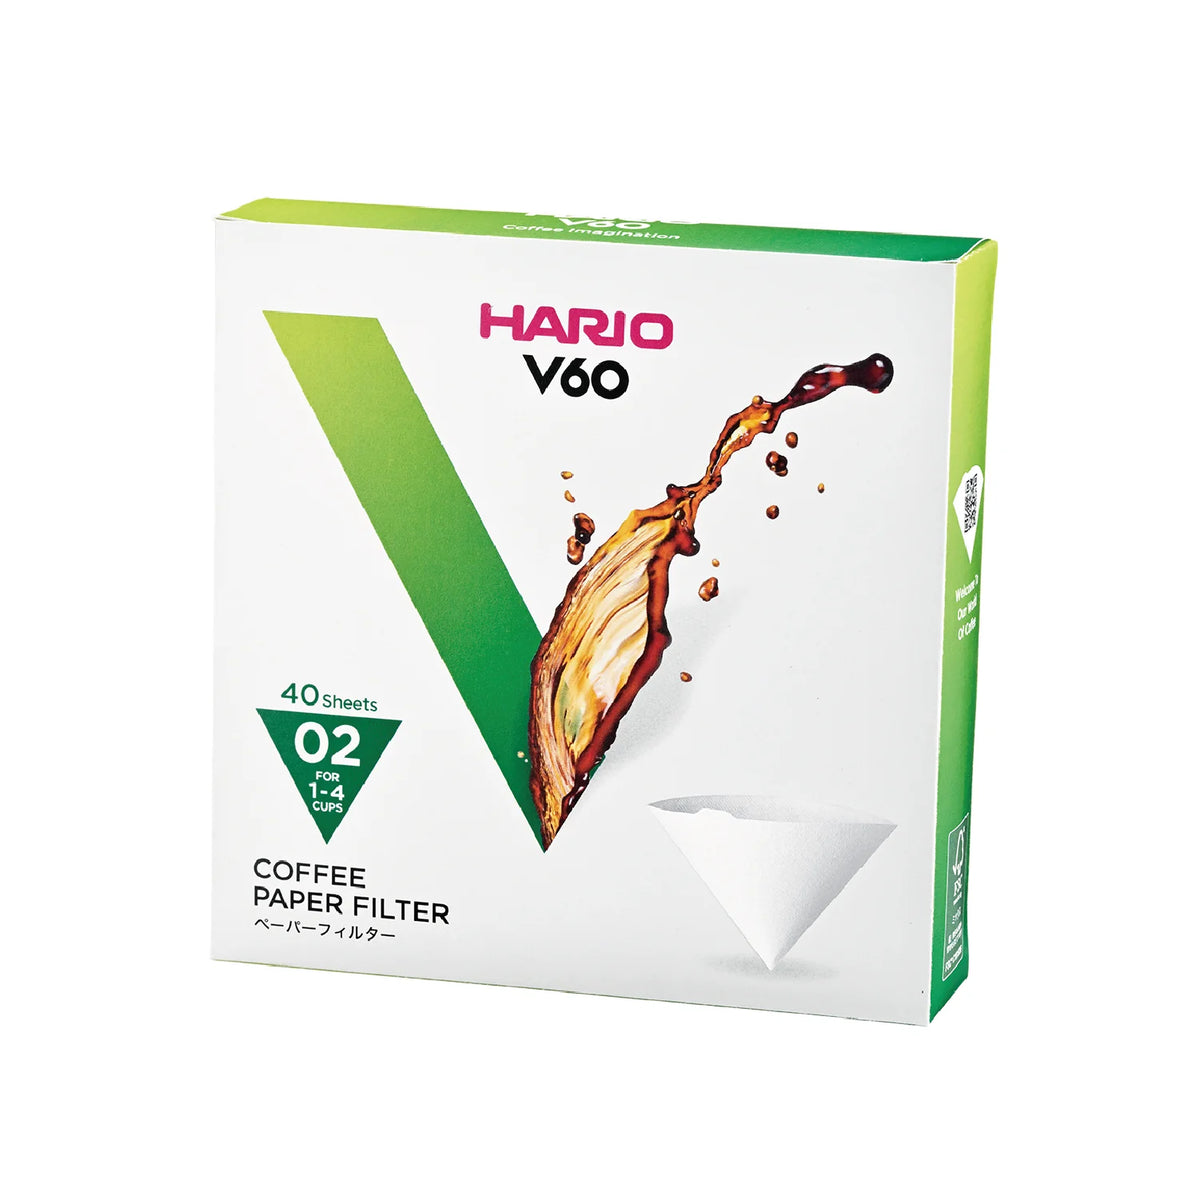 Hario V60 White Paper Filter 40 sheets